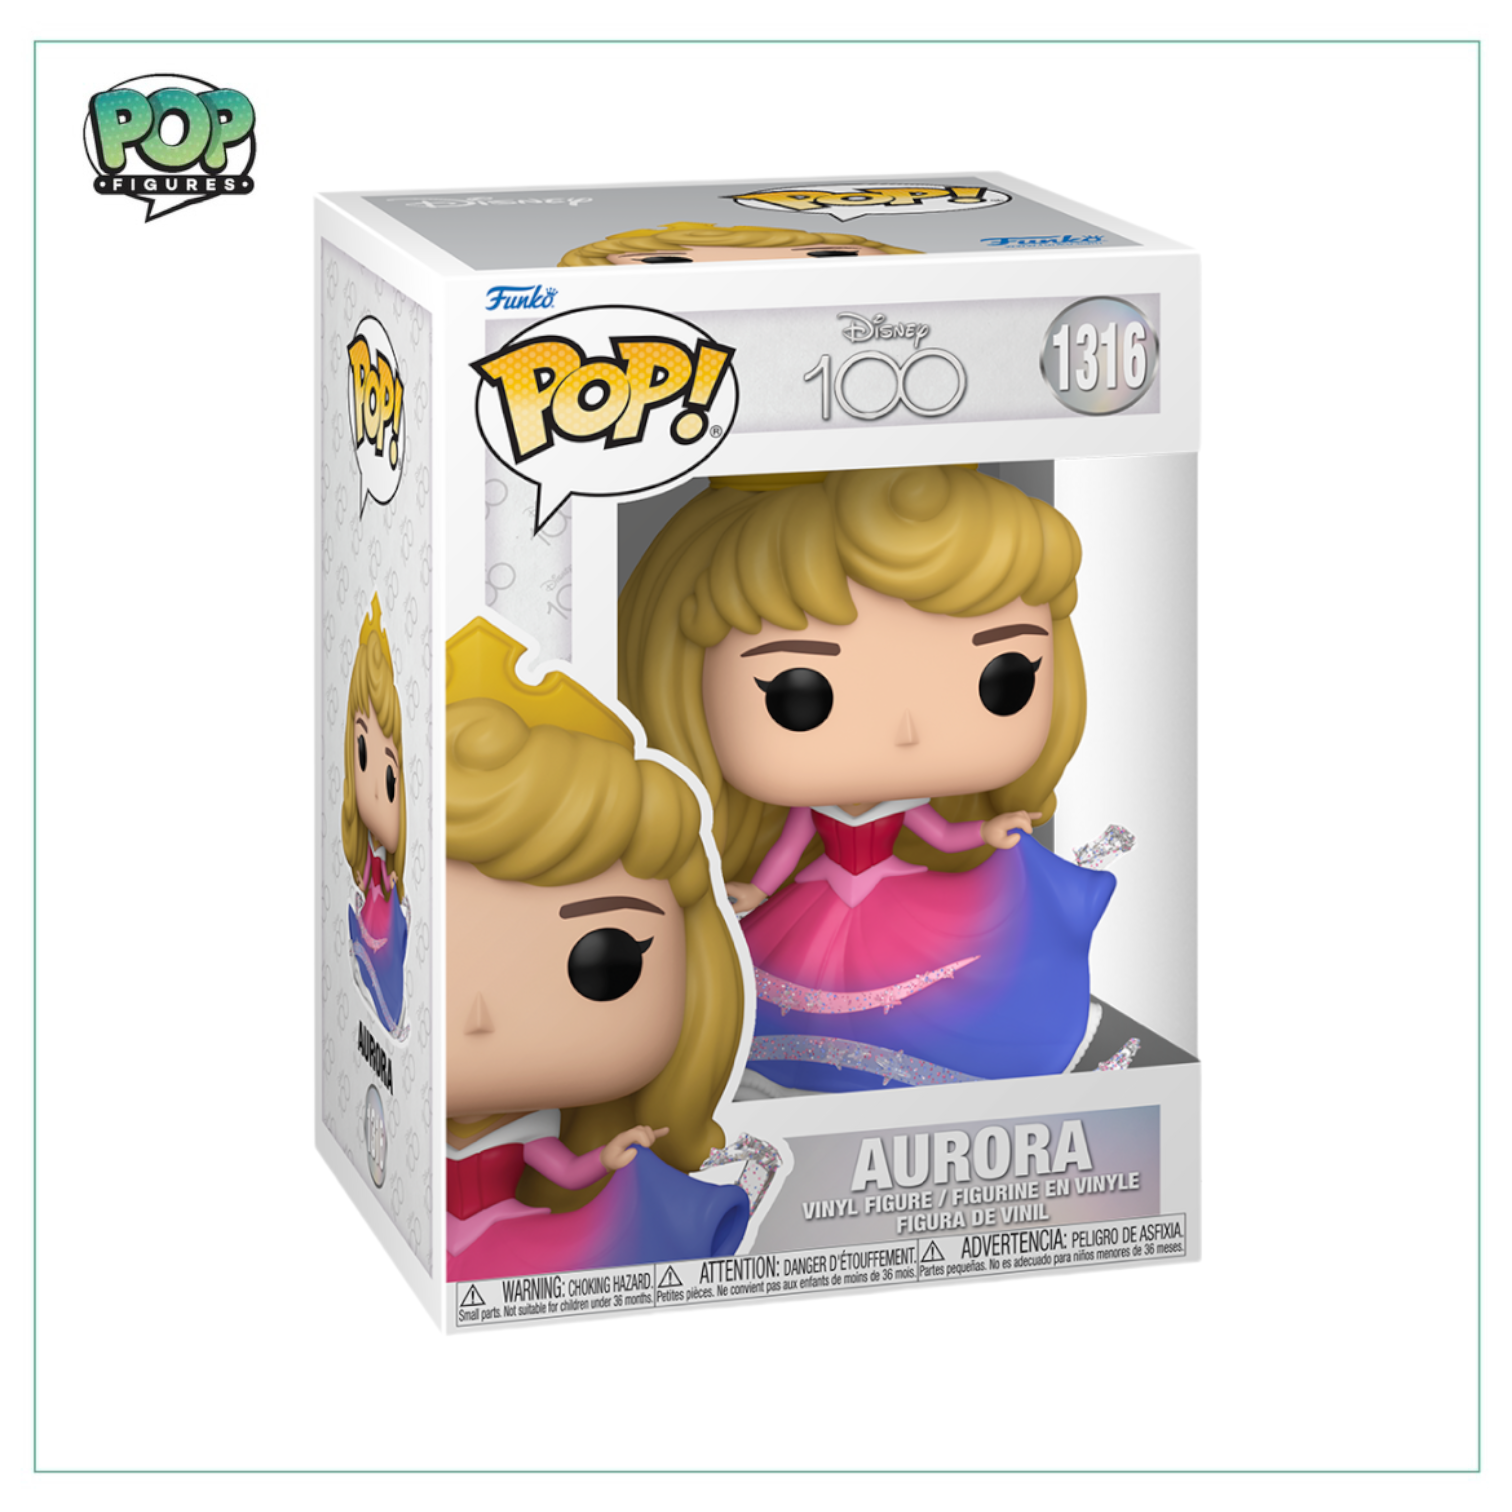 Aurora #1316 Funko Pop! Disney 100th